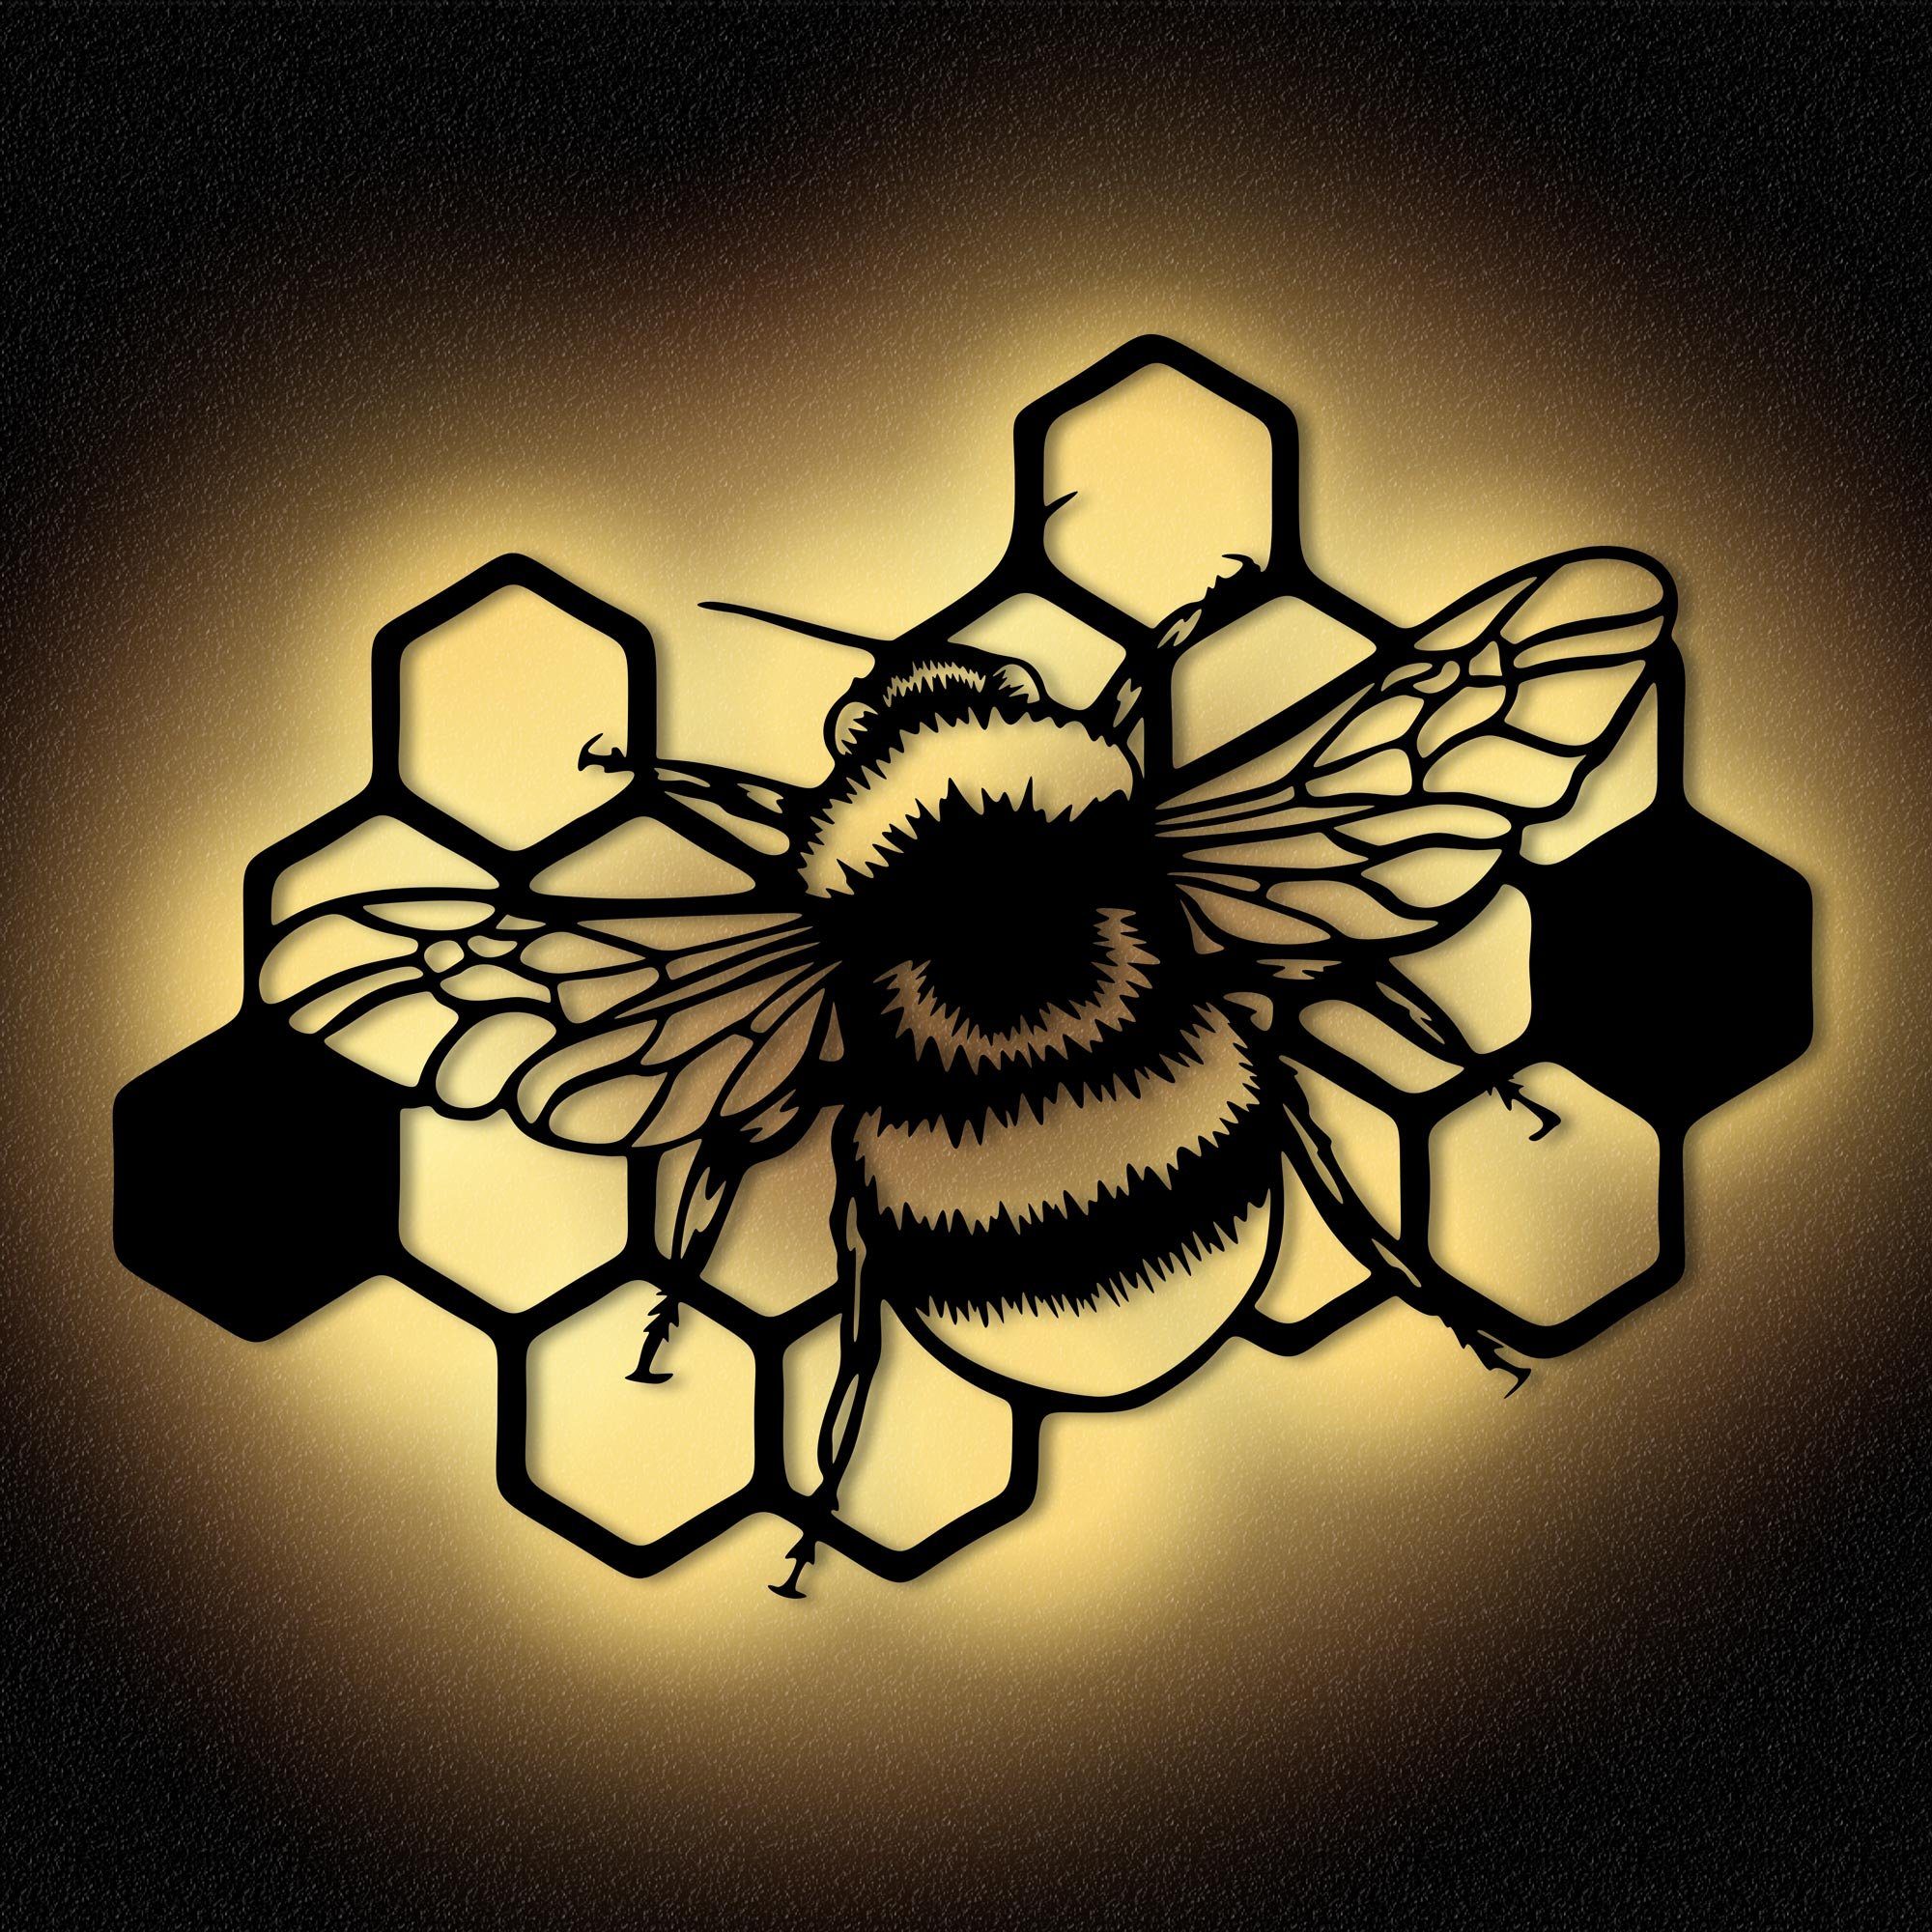 Namofactur LED Wandleuchte Biene LED Dekoration Holz fest Warmweiß integriert, Batteriebetrieb, MDF Deko Wanddeko 